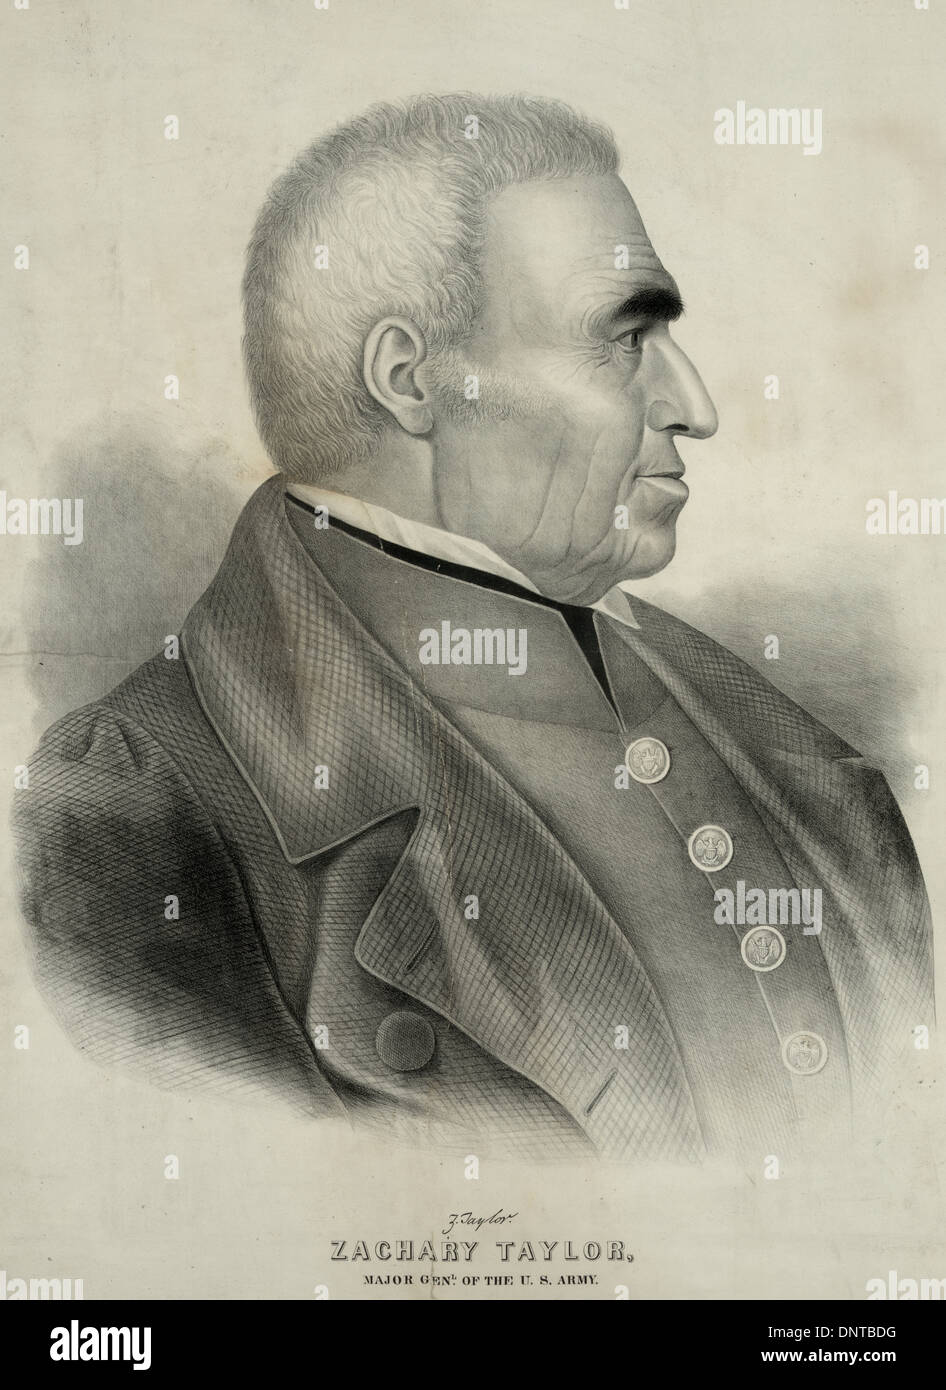 Zachary Taylor, Major General der US Army c1847 Mai 19, später Präsident der USA Stockfoto